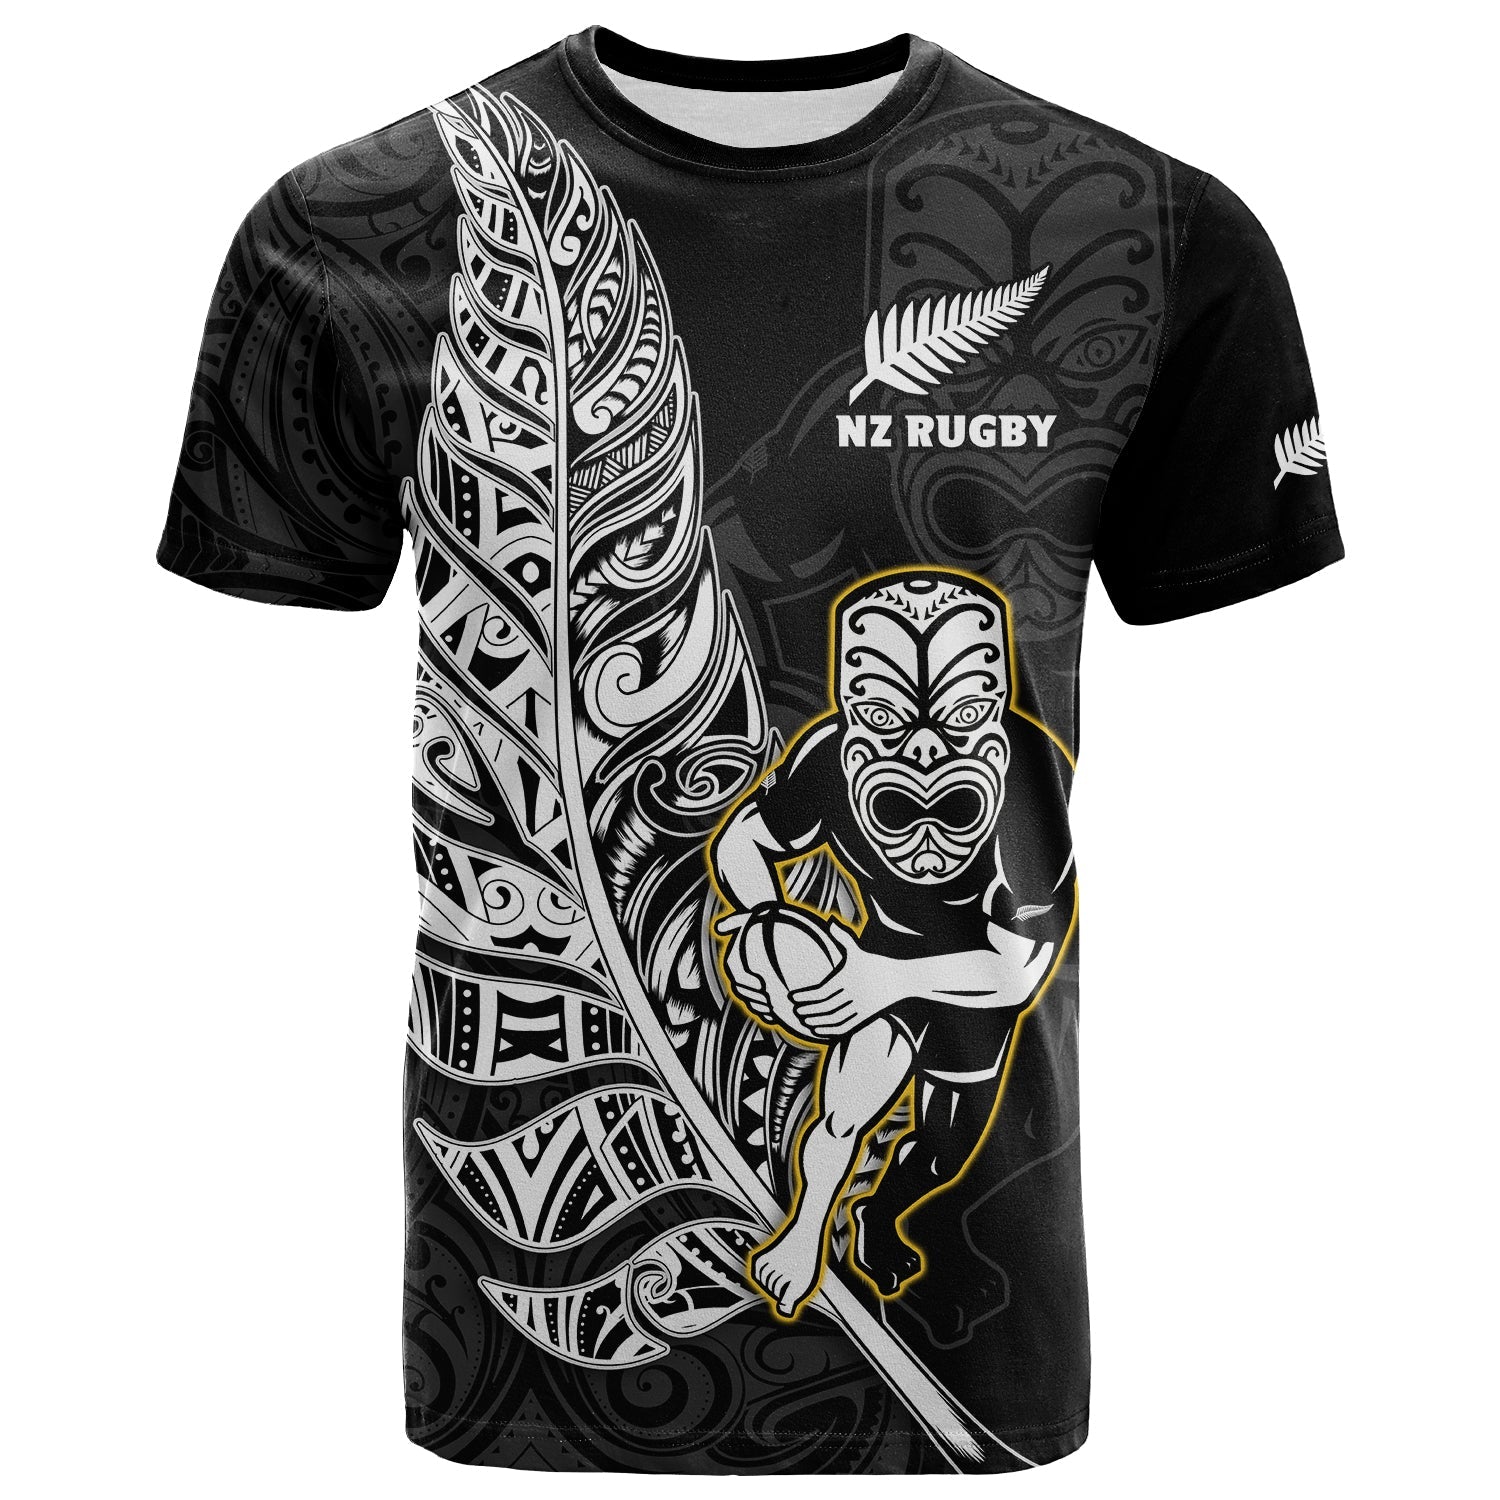 (Custom Text and Number) New Zealand Silver Fern Rugby T Shirt All Black Maori Version Black LT14 Black - Polynesian Pride